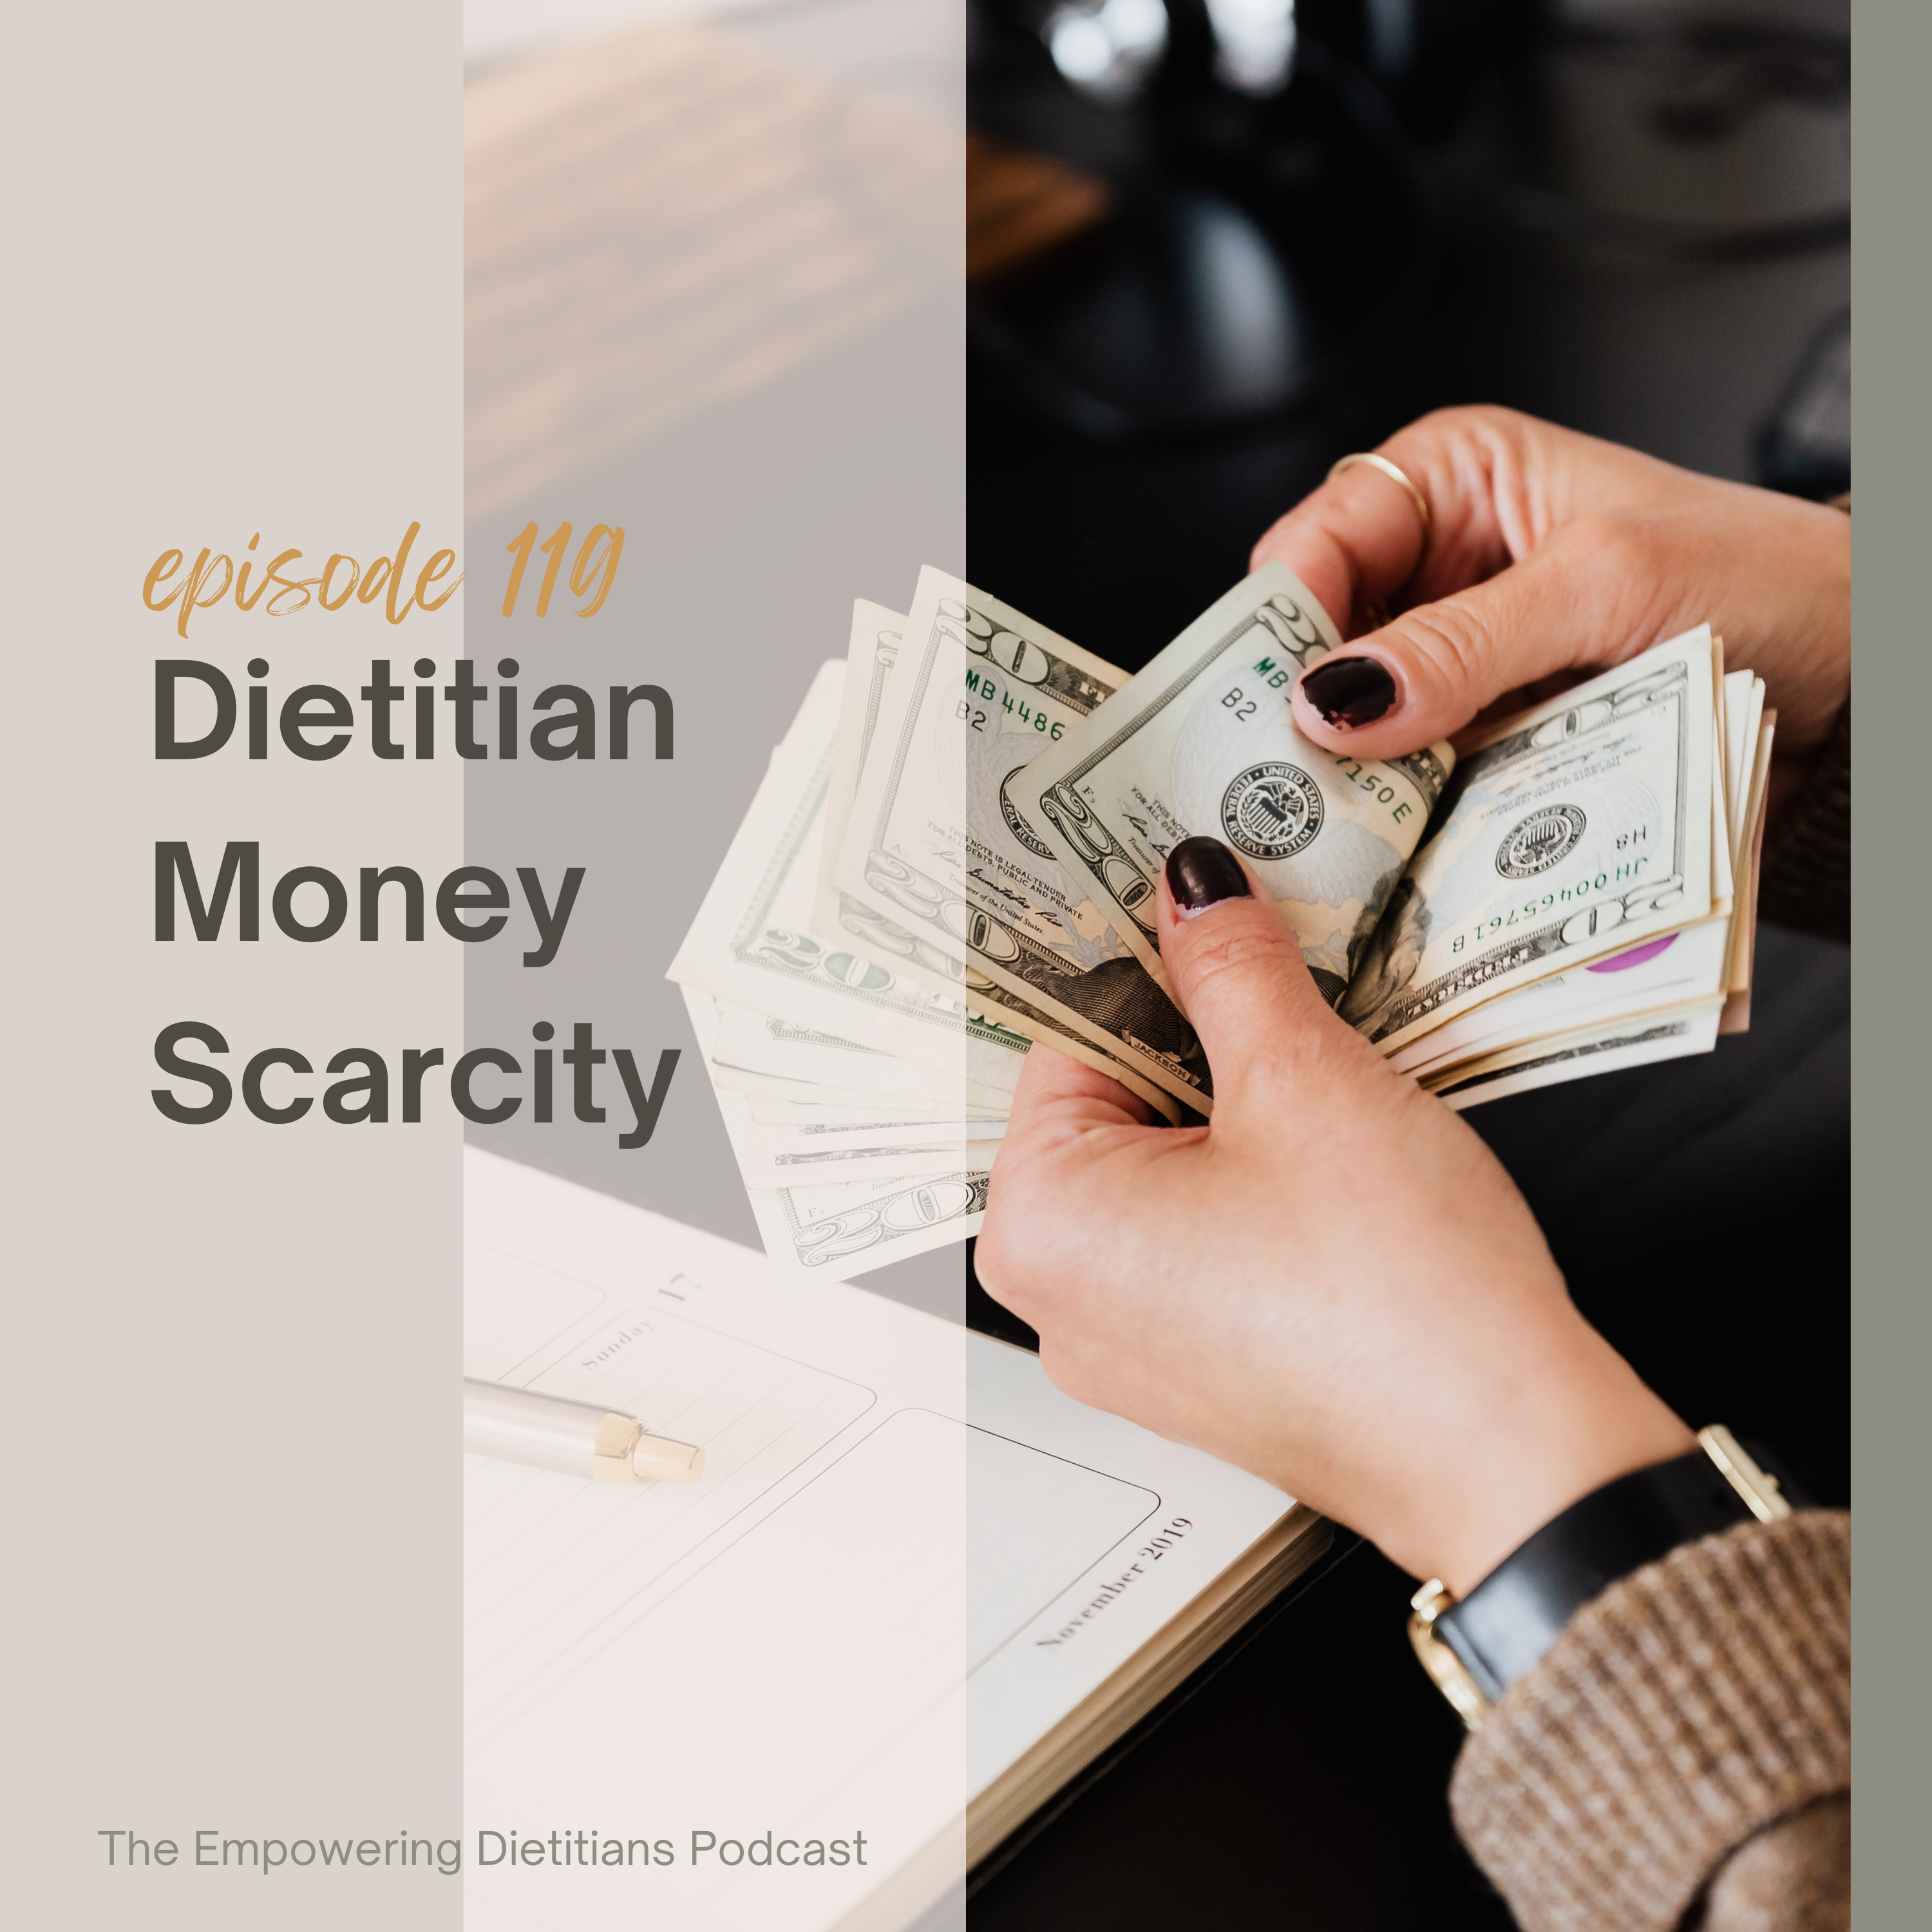 dietitian money scarcity